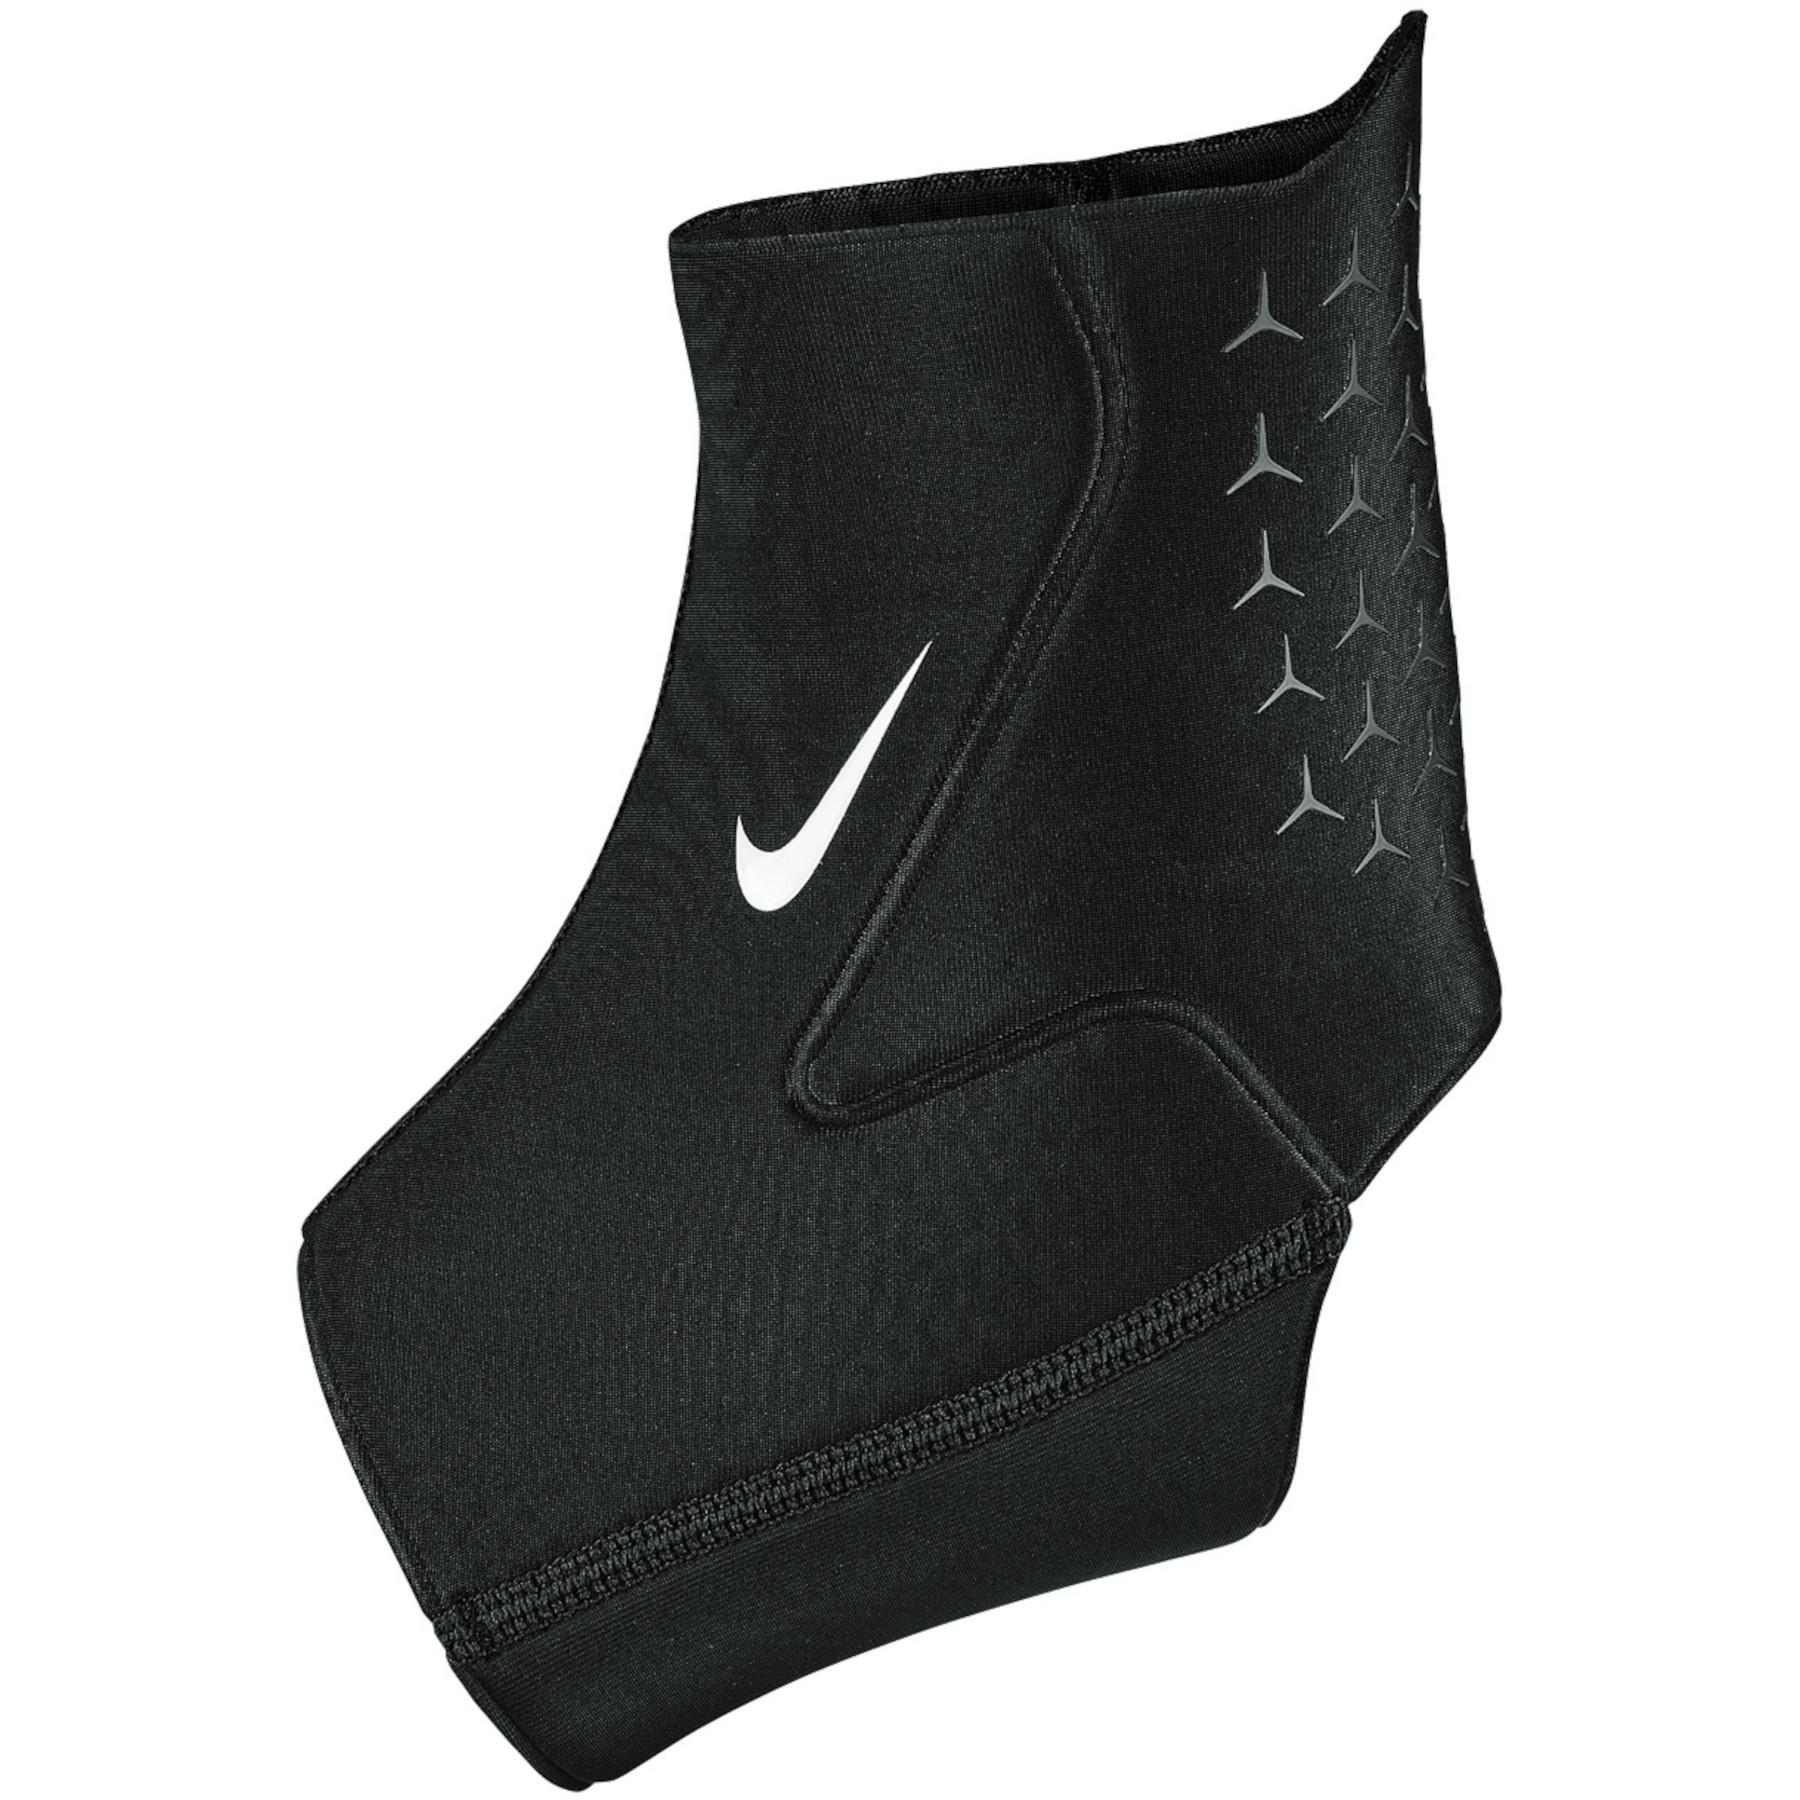 Productfoto van Nike Pro Ankle Sleeve 3.0 - black/white 010